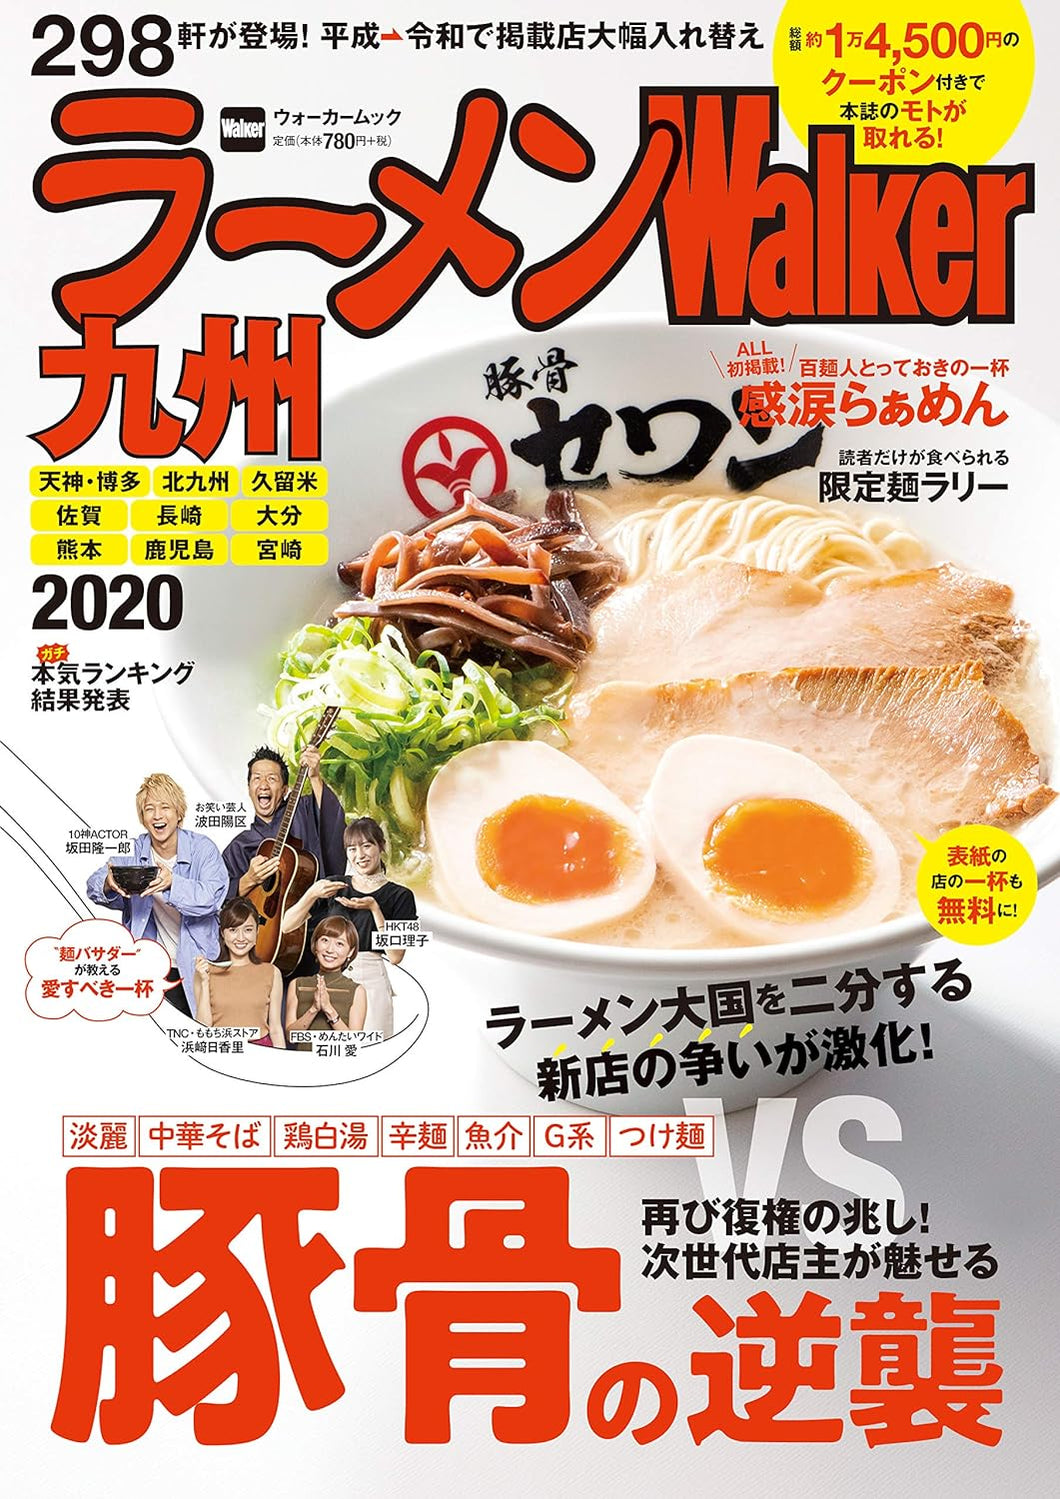 Ramen Walker Kyushu Edition 2020